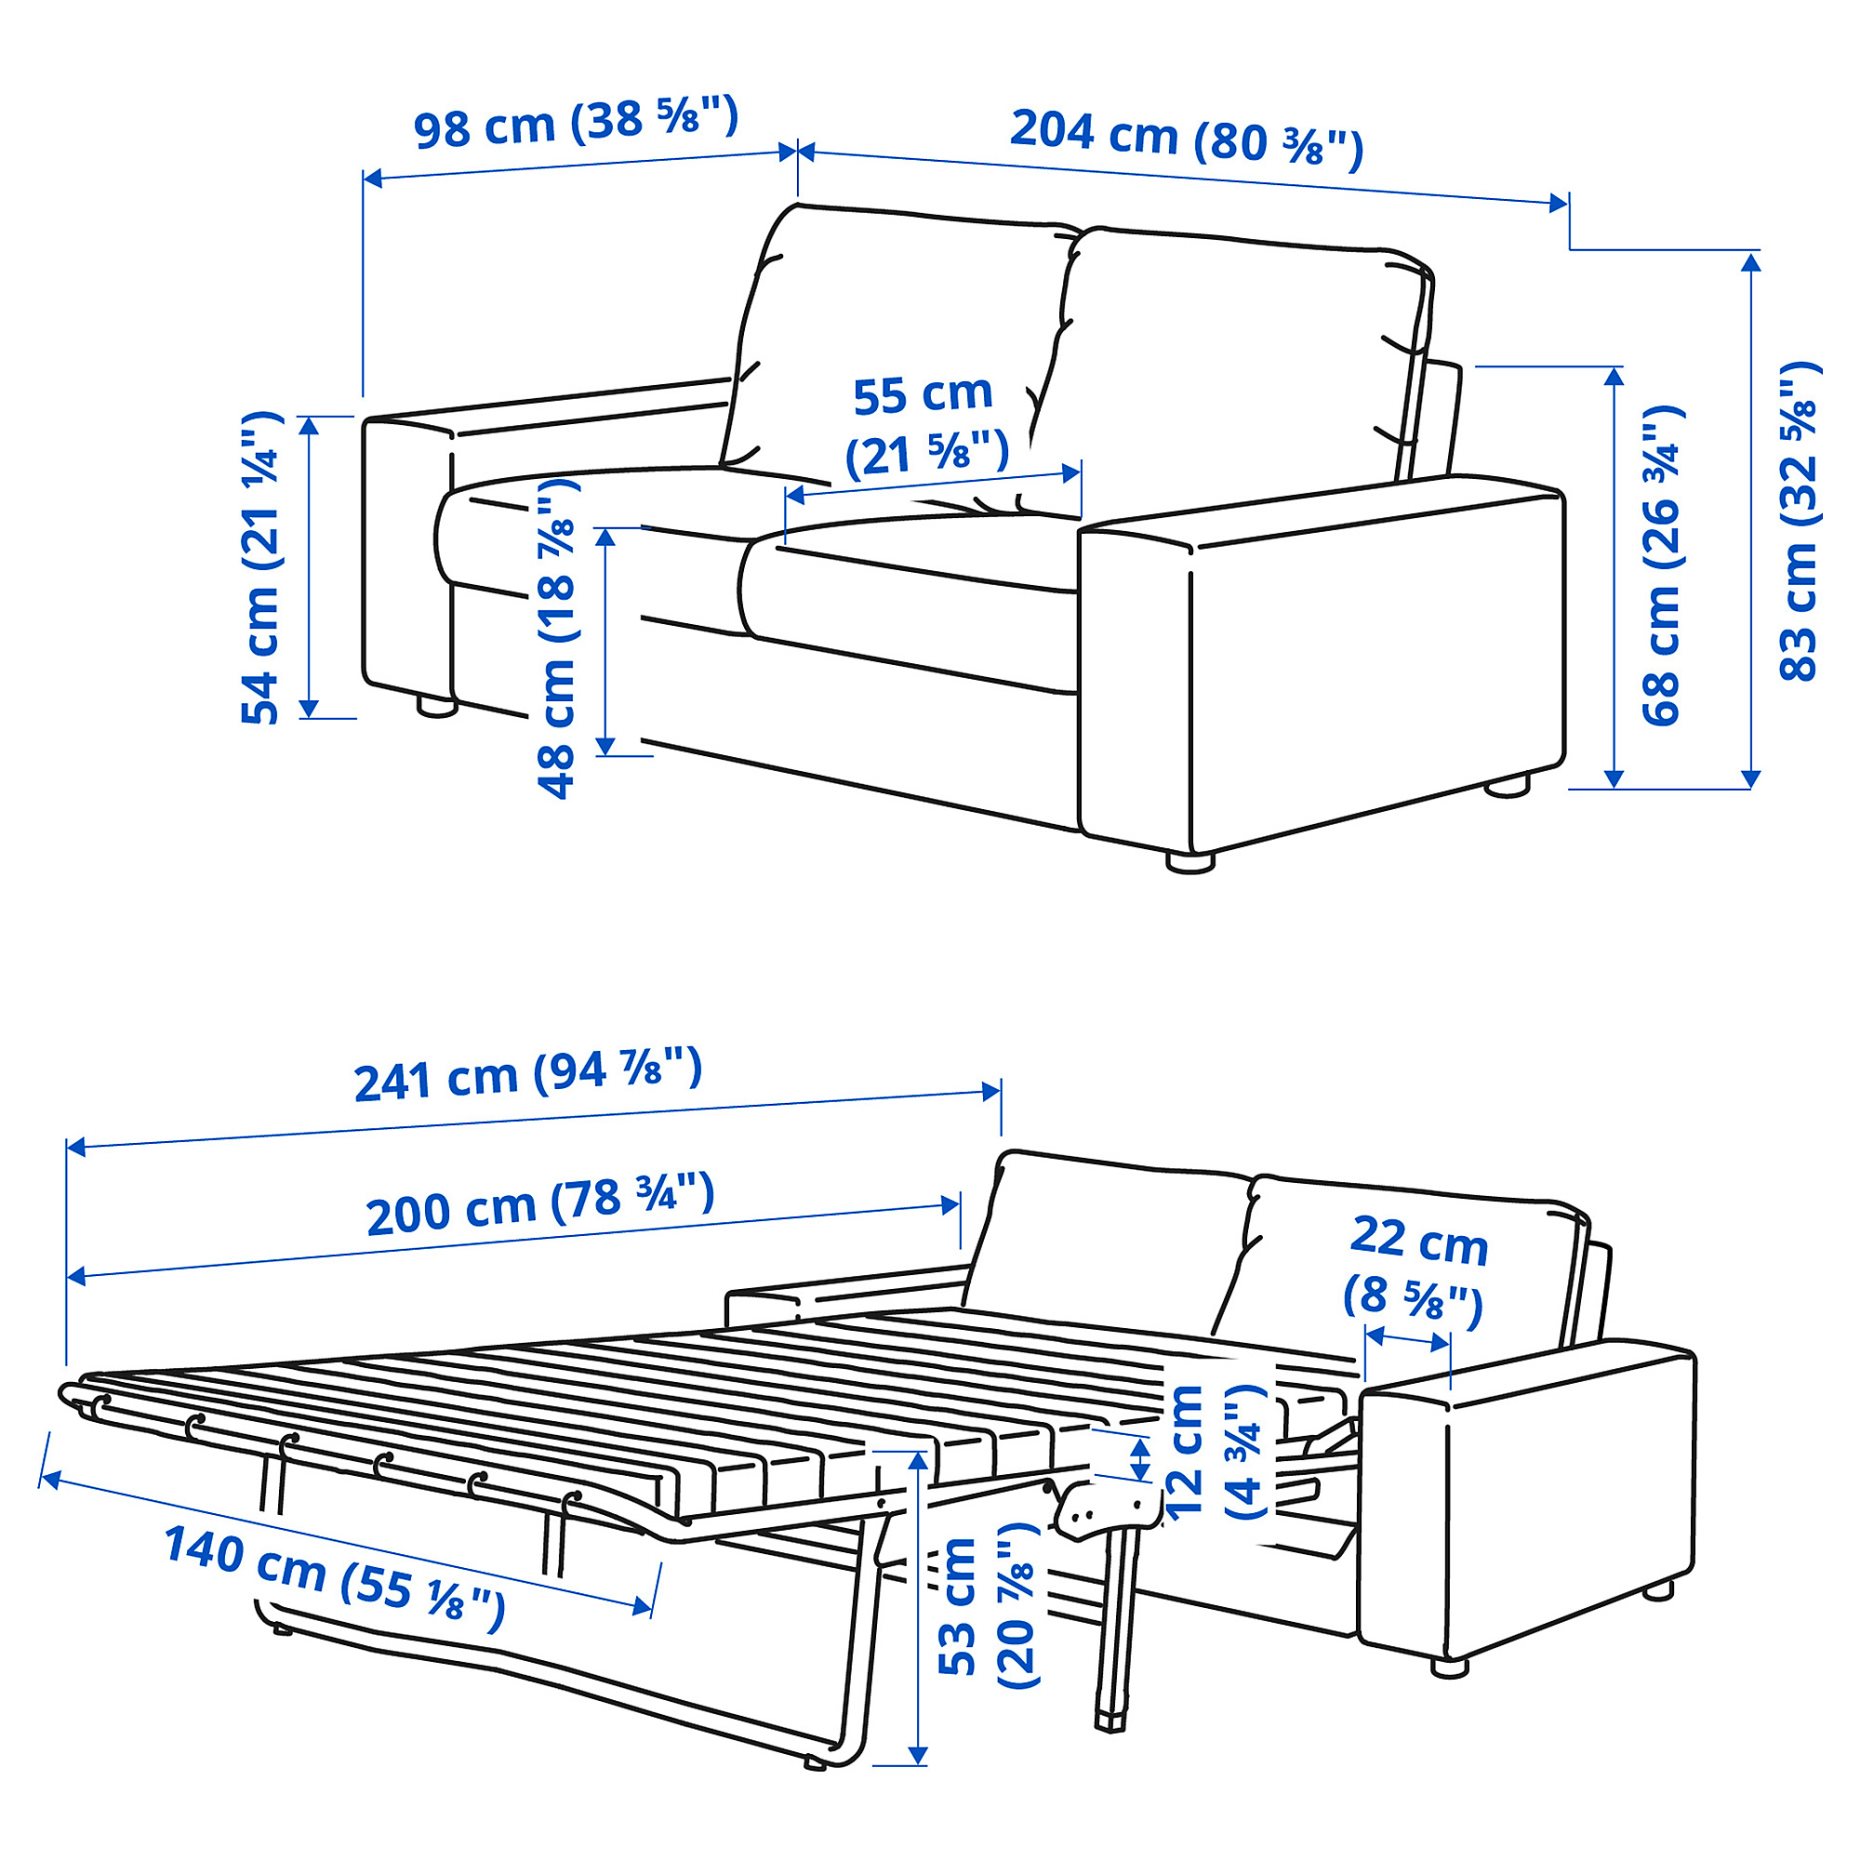 VIMLE, 2-seat sofa-bed with wide armrests, 595.370.42